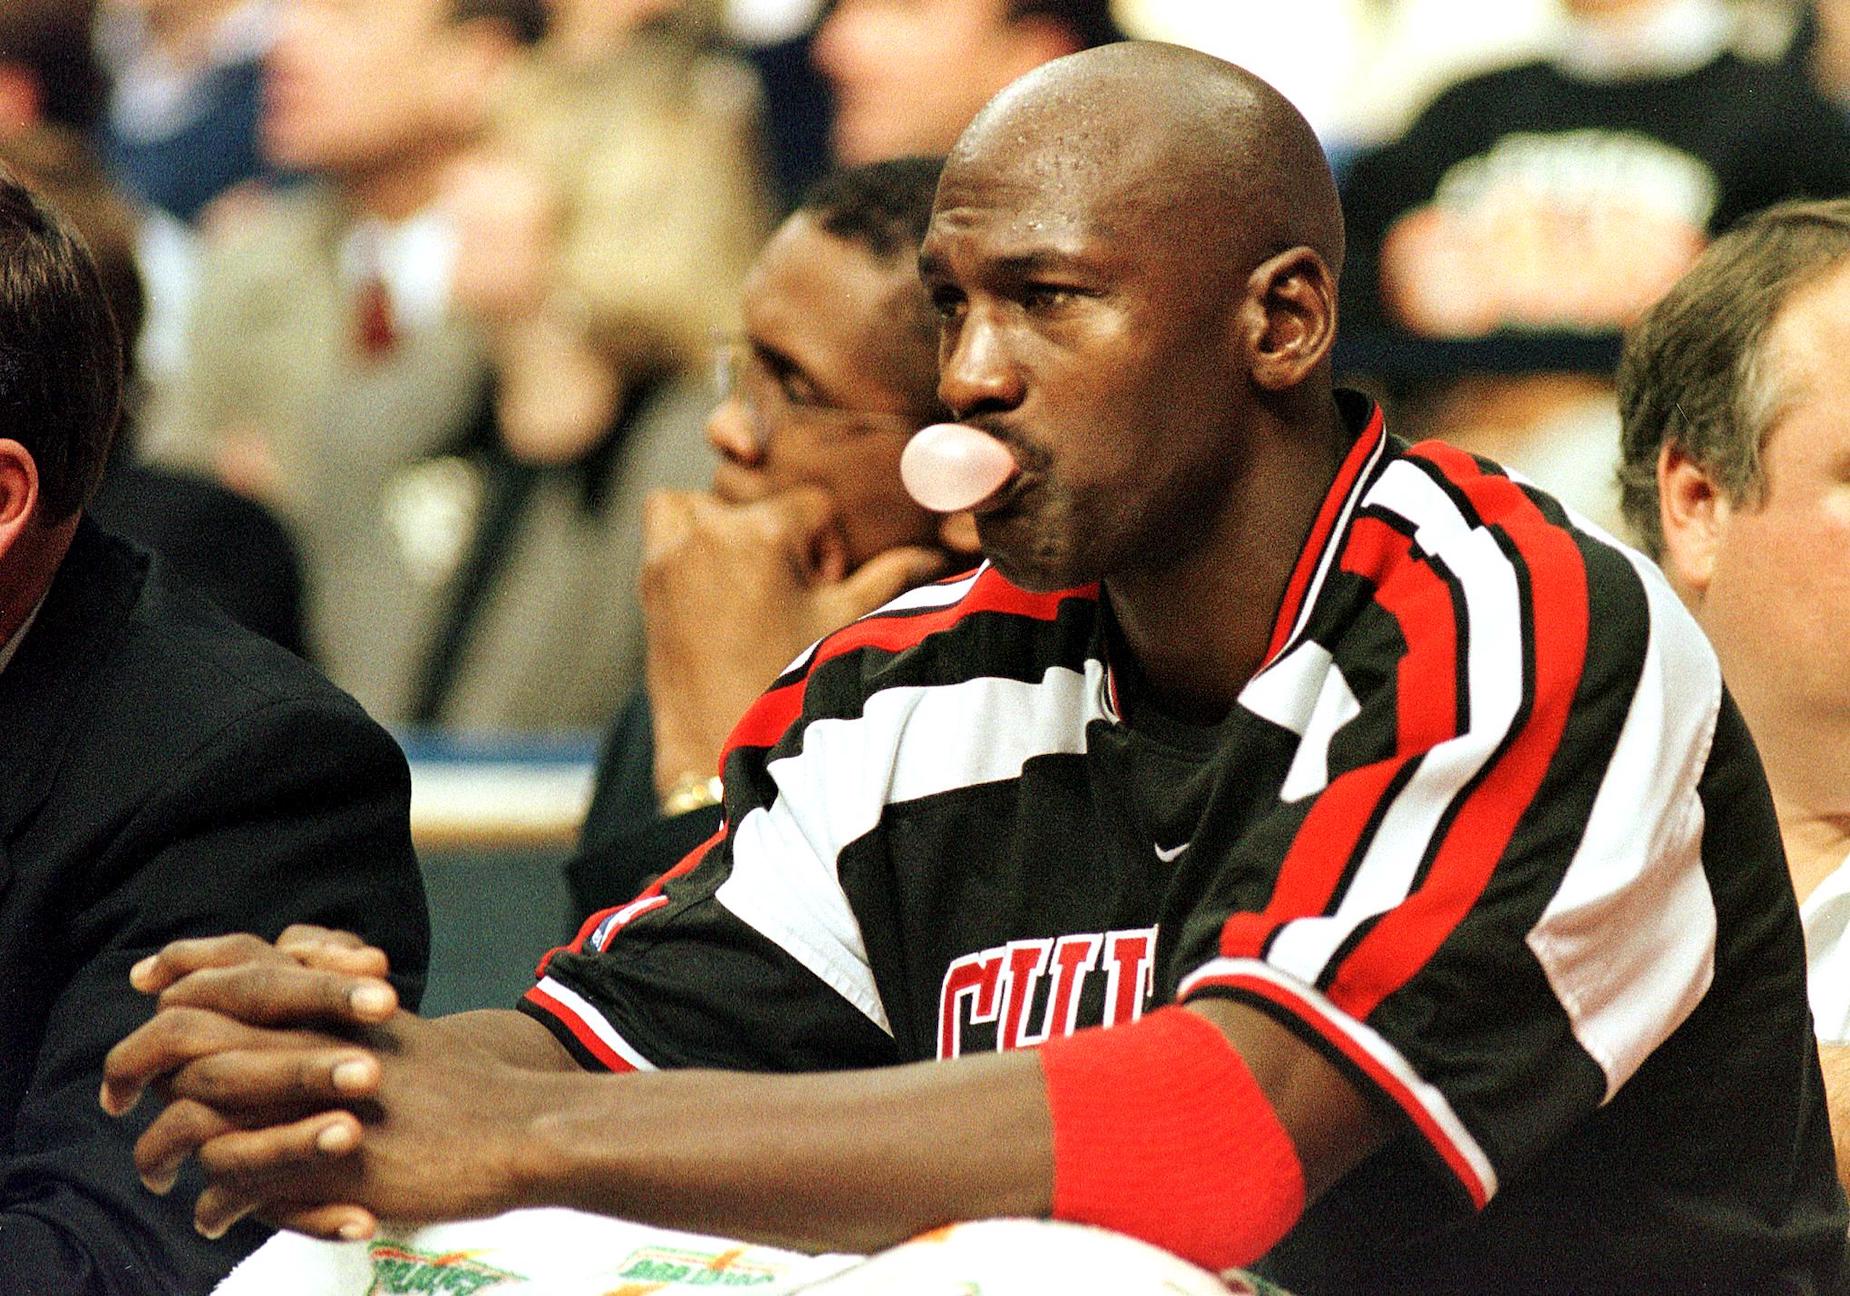 Michael Jordan sits on the Chicago Bulls bench during the 1997 NBA season